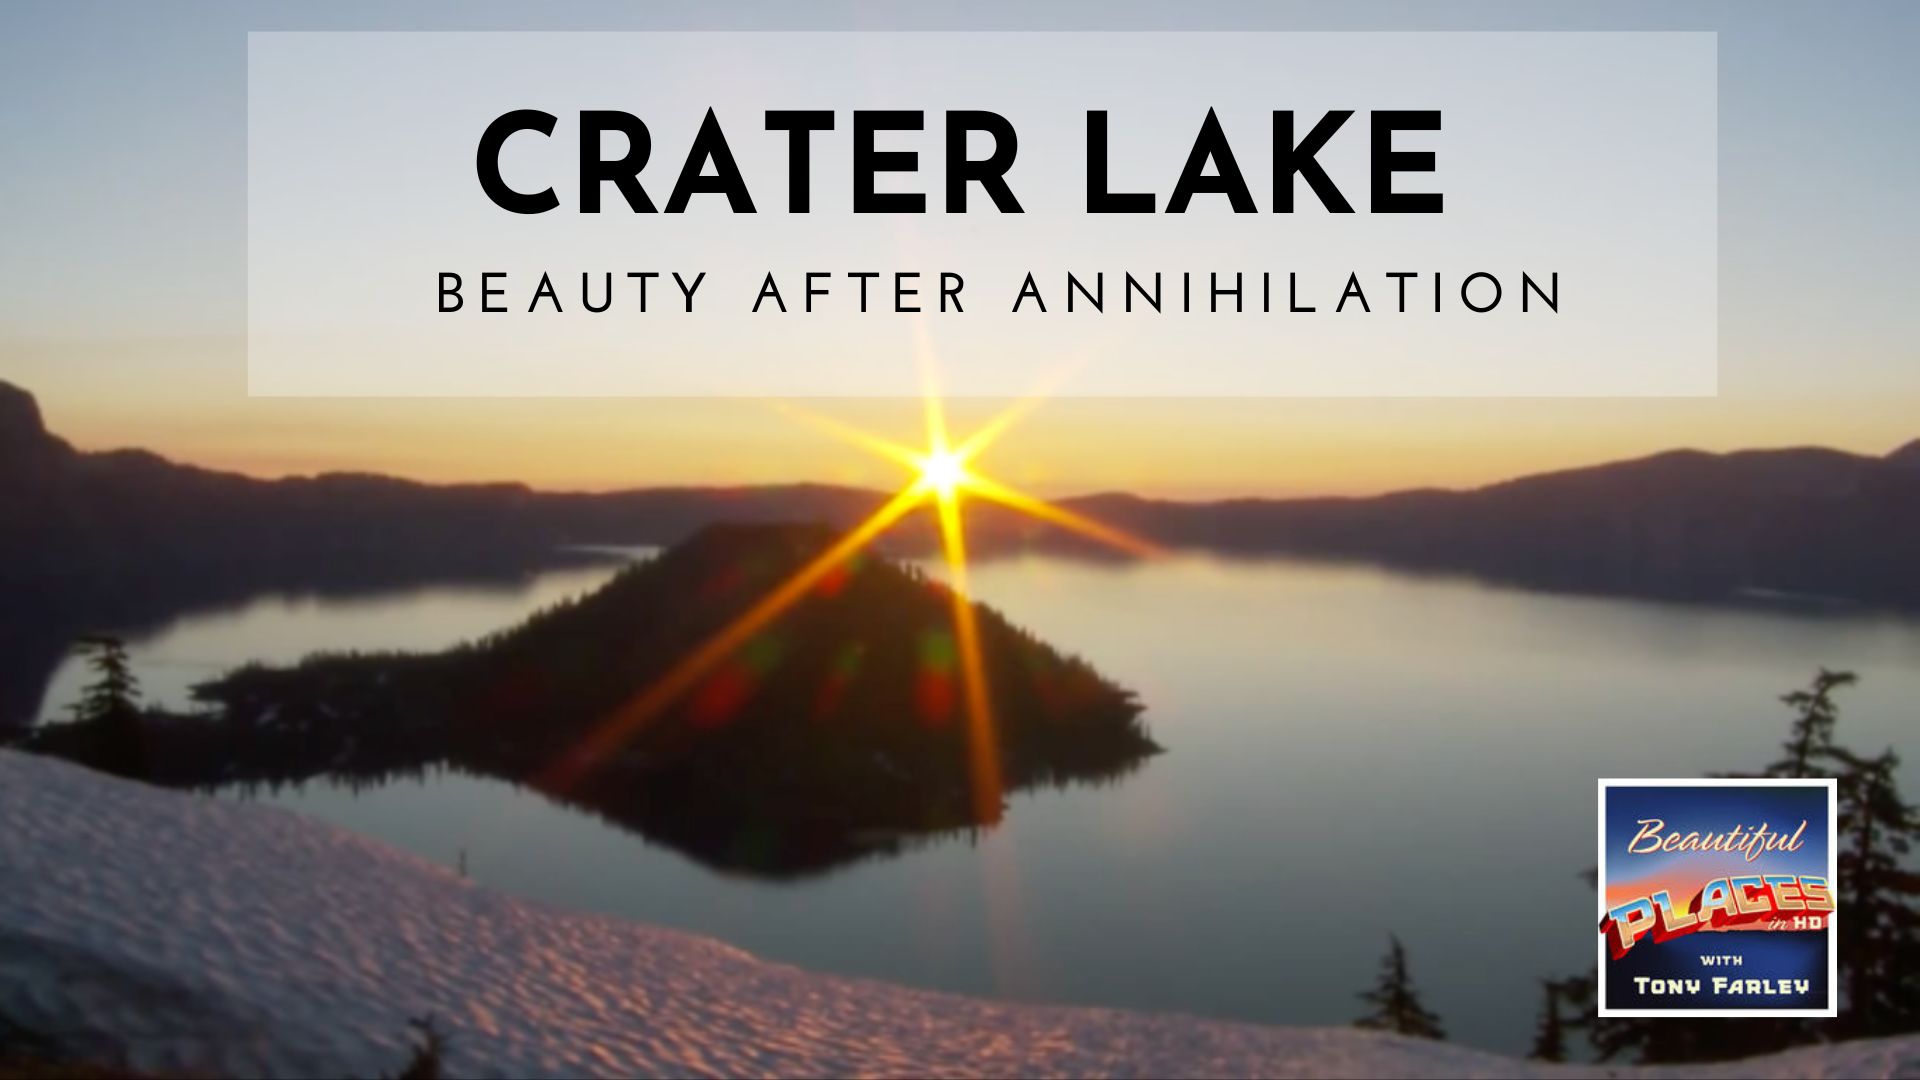 Enjoy the sunrise and sunset from Crater Lake, Oregon.